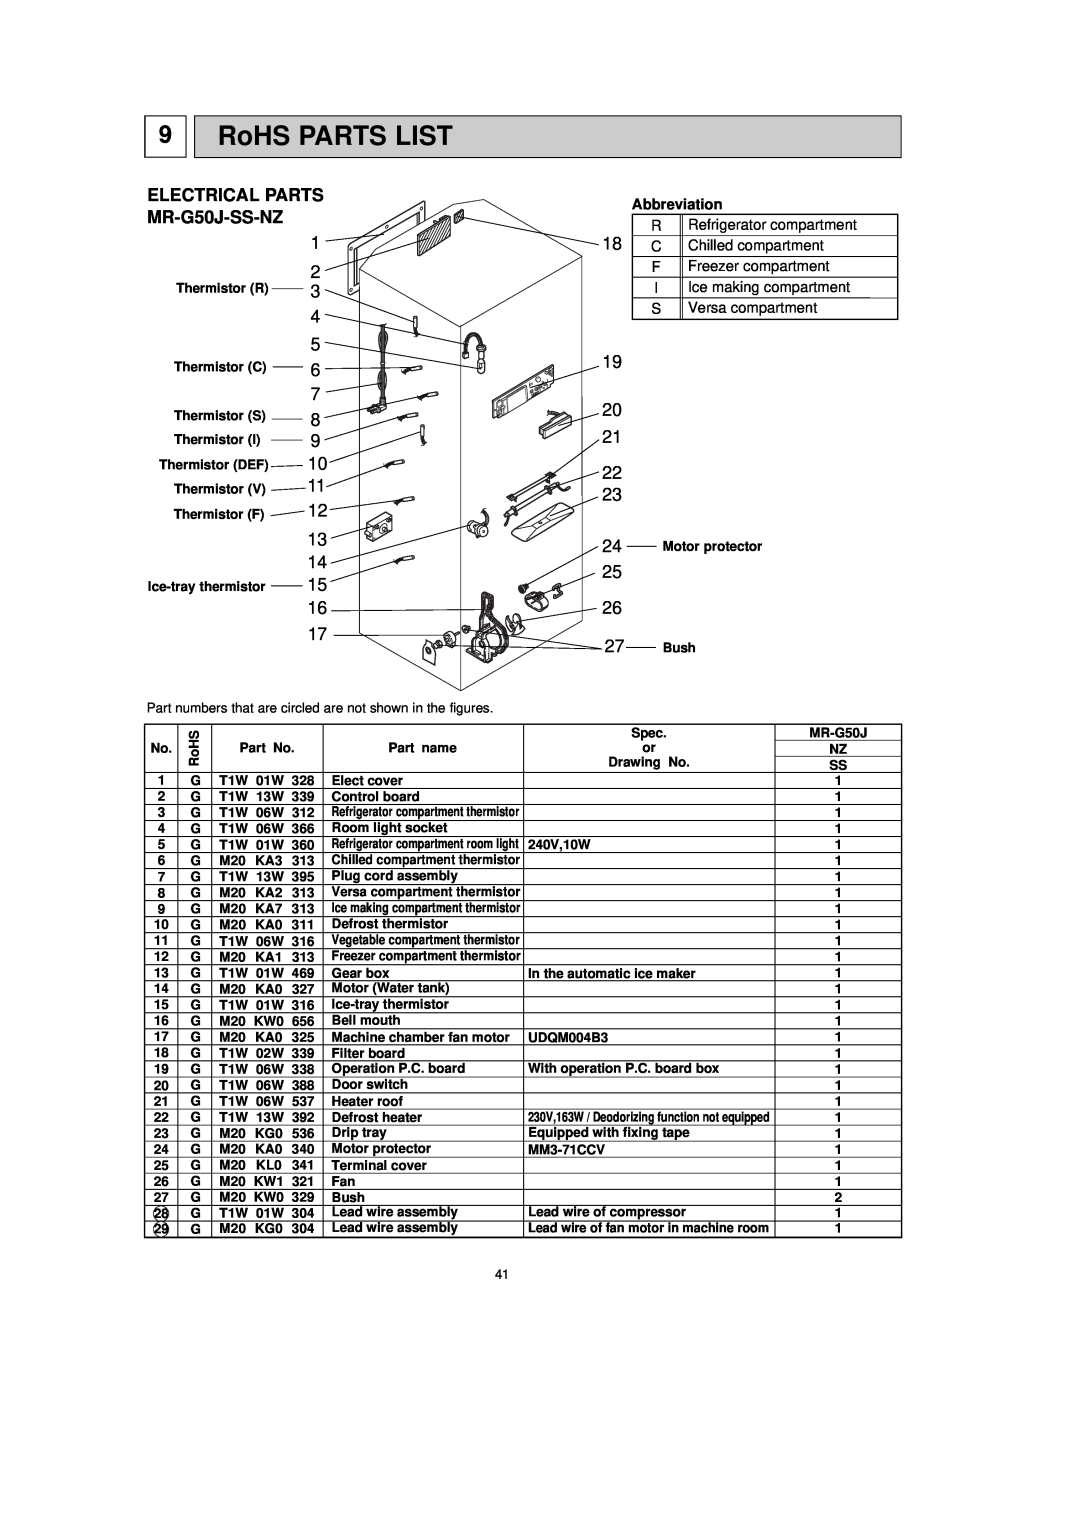 Mitsubishi Electronics MR-G50J-SS-NZ manual RoHS PARTS LIST, Electrical Parts, Abbreviation, R Refrigerator compartment 